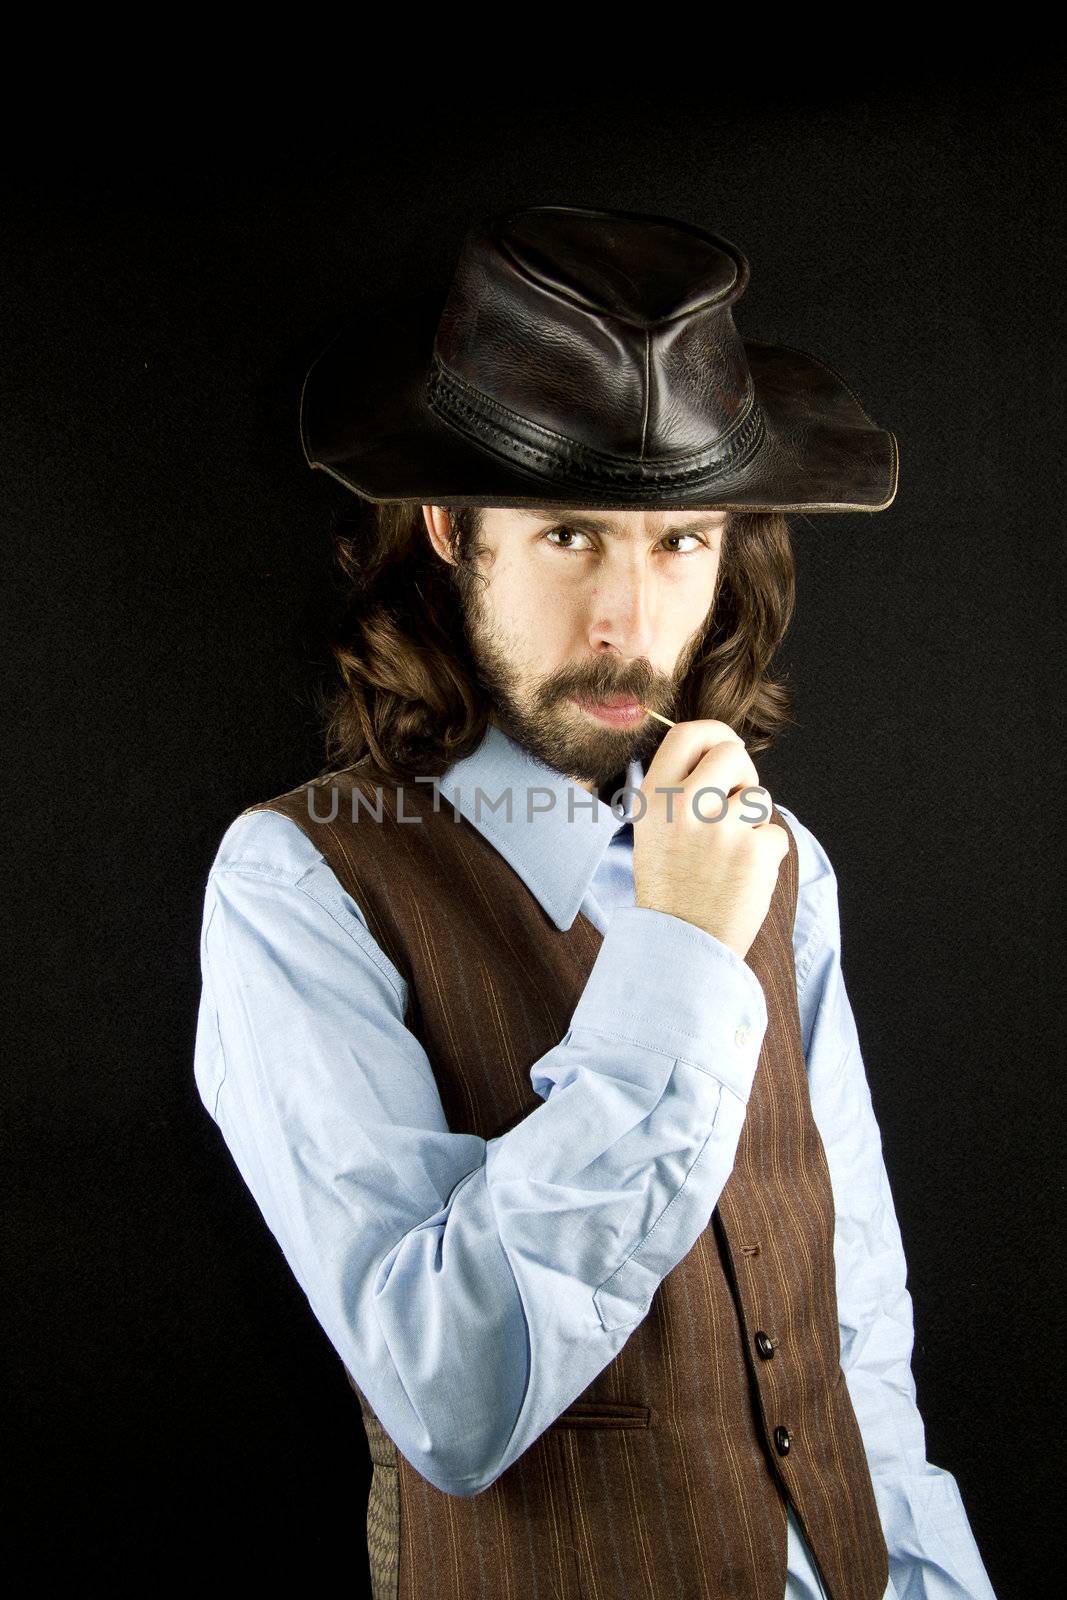 a man called a Texan cowboy